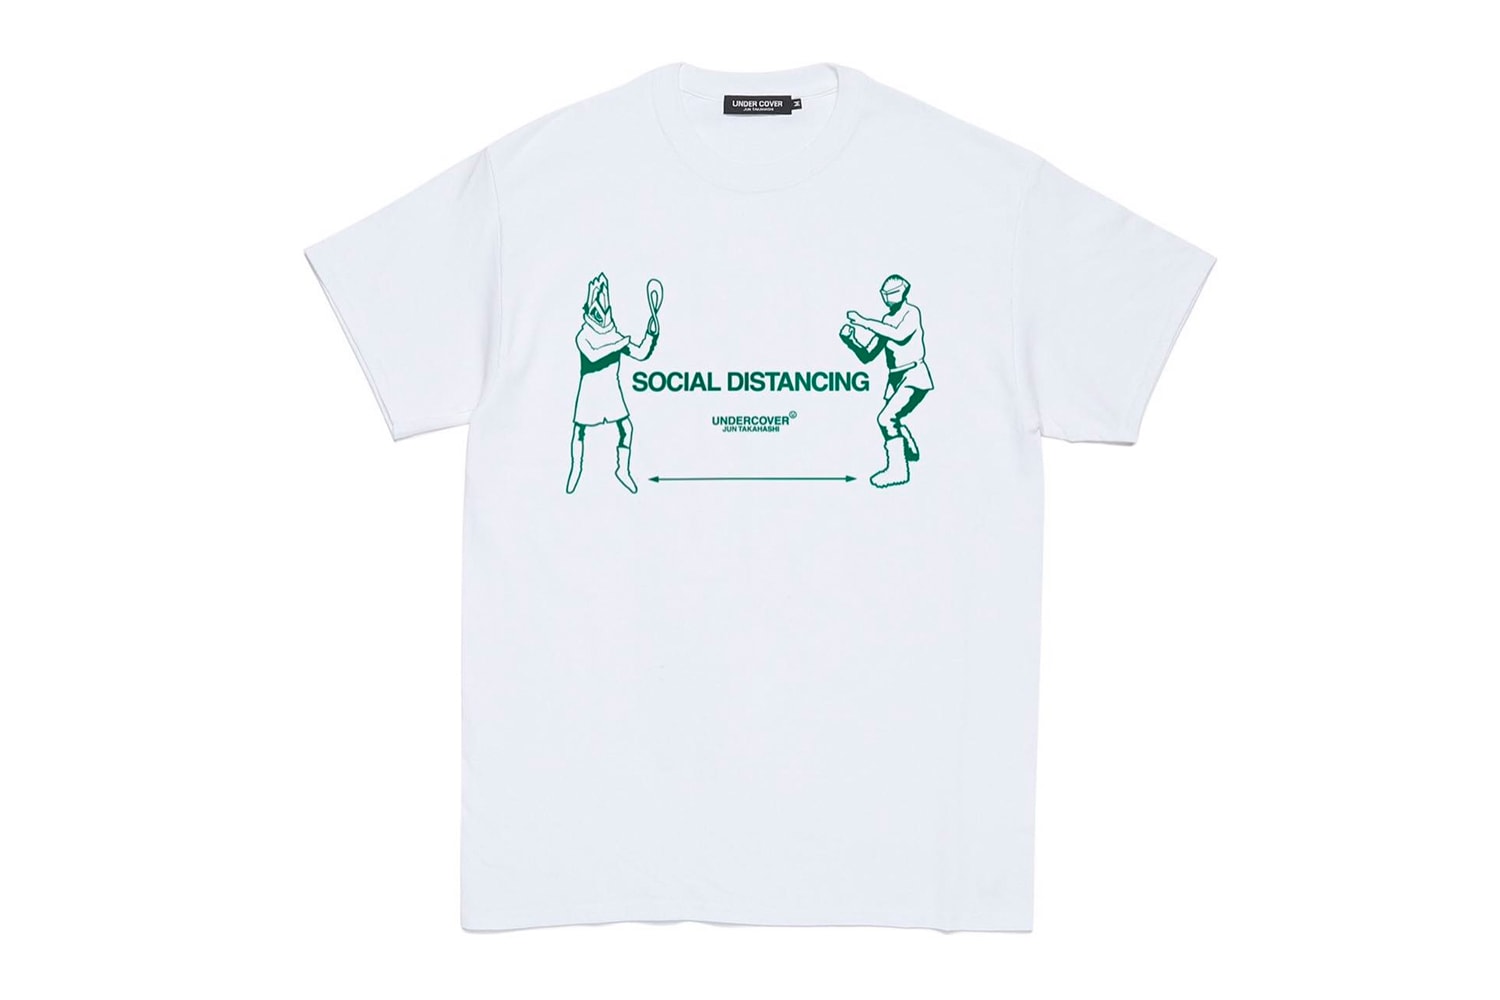 UNDERCOVER Social Distancing T-shirts Capsule Collection COVID-19 Coronavirus Jun Takahashi 